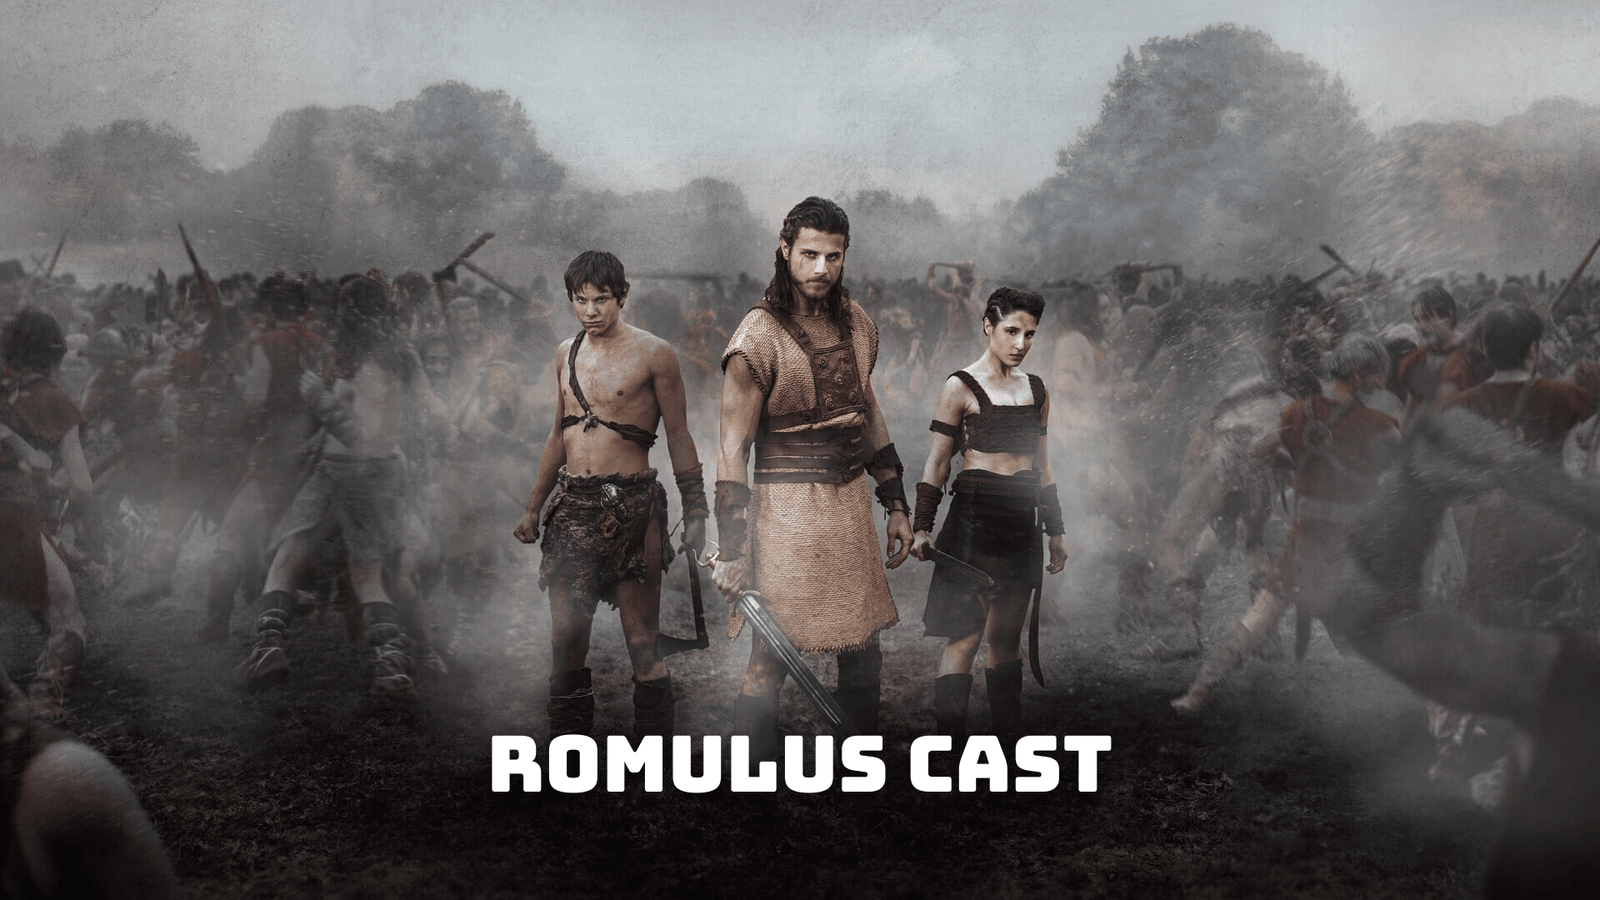 Romulus Cast - Ages, Partners, Characters